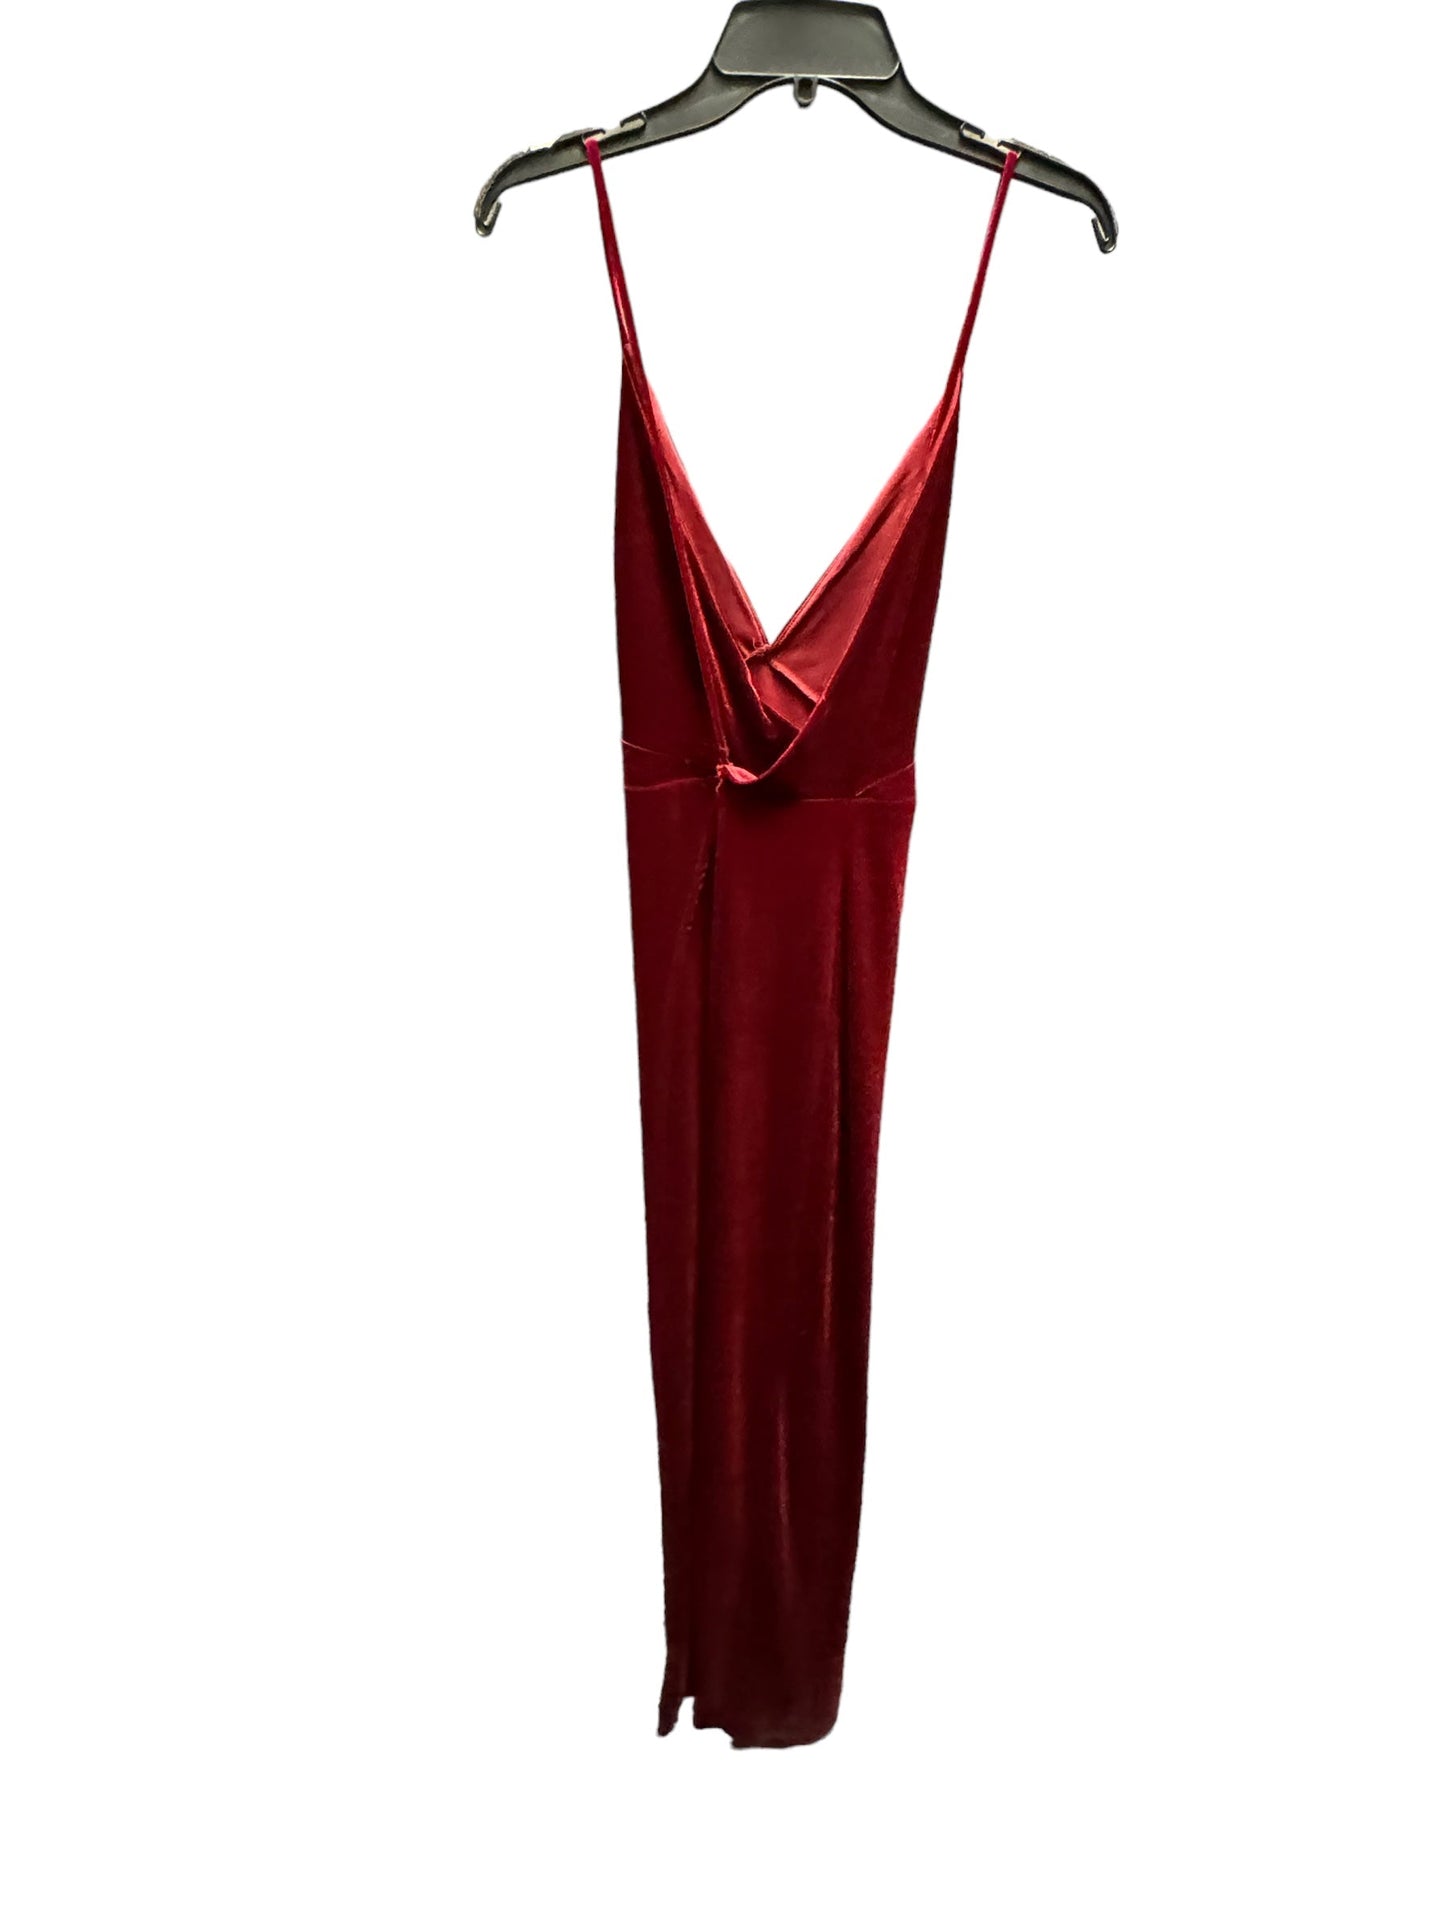 Dress Casual Maxi By Fashion Nova  Size: 16